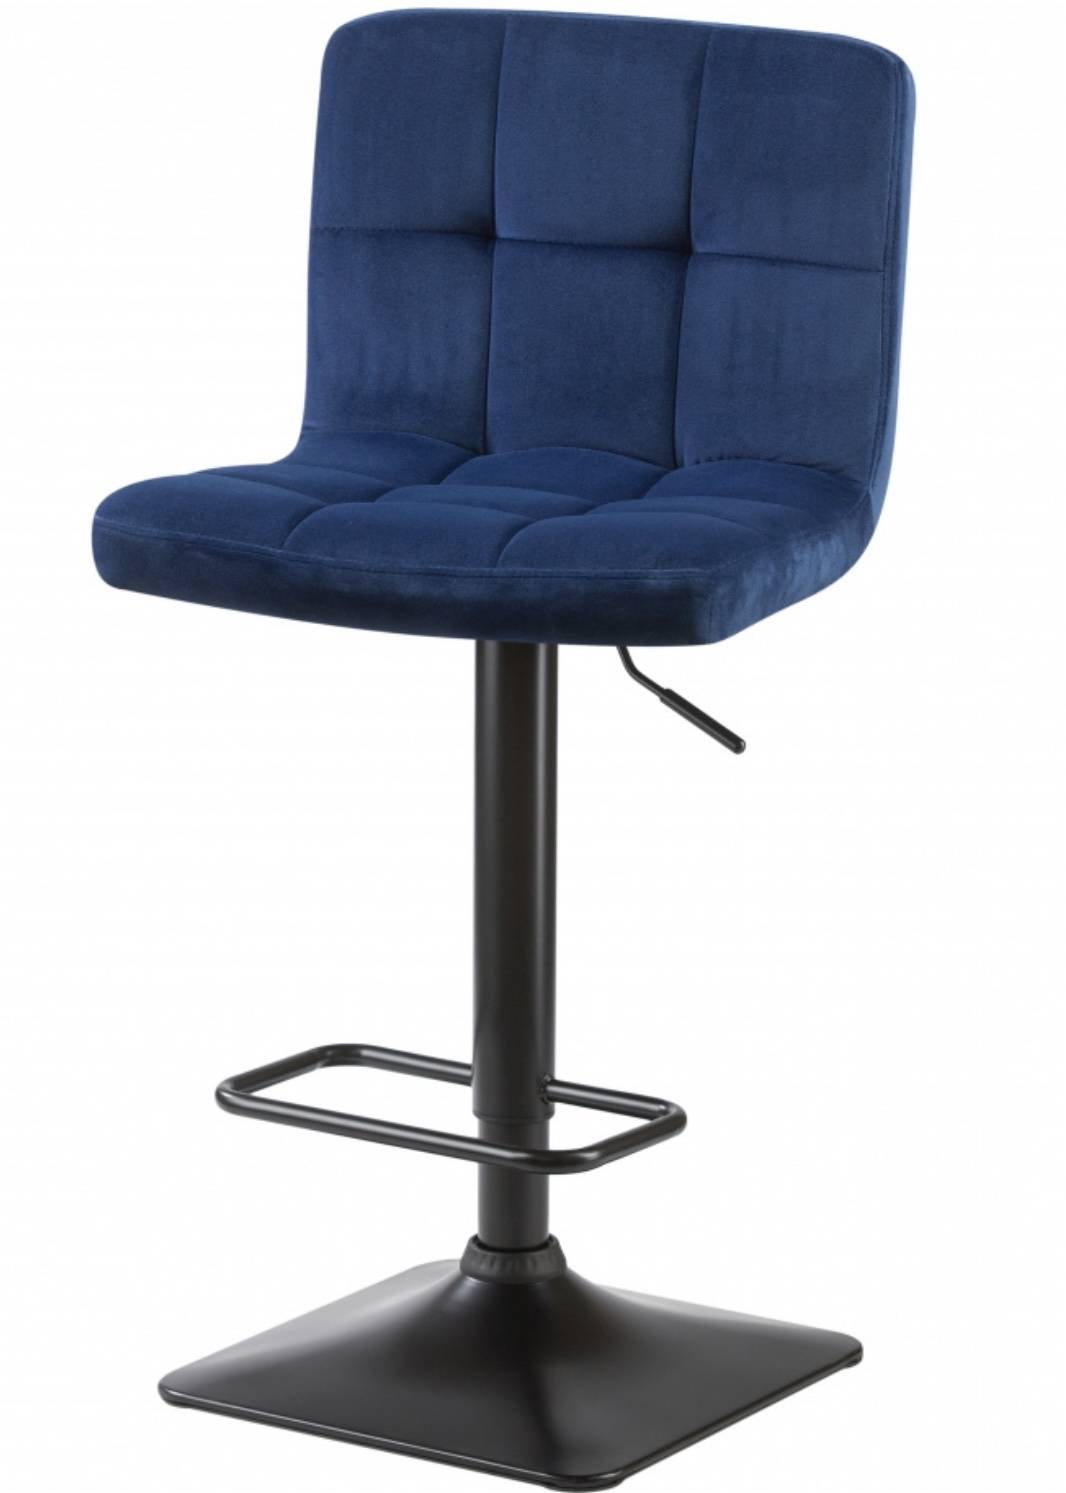 Купить синий стул Dominic в romanta.ru